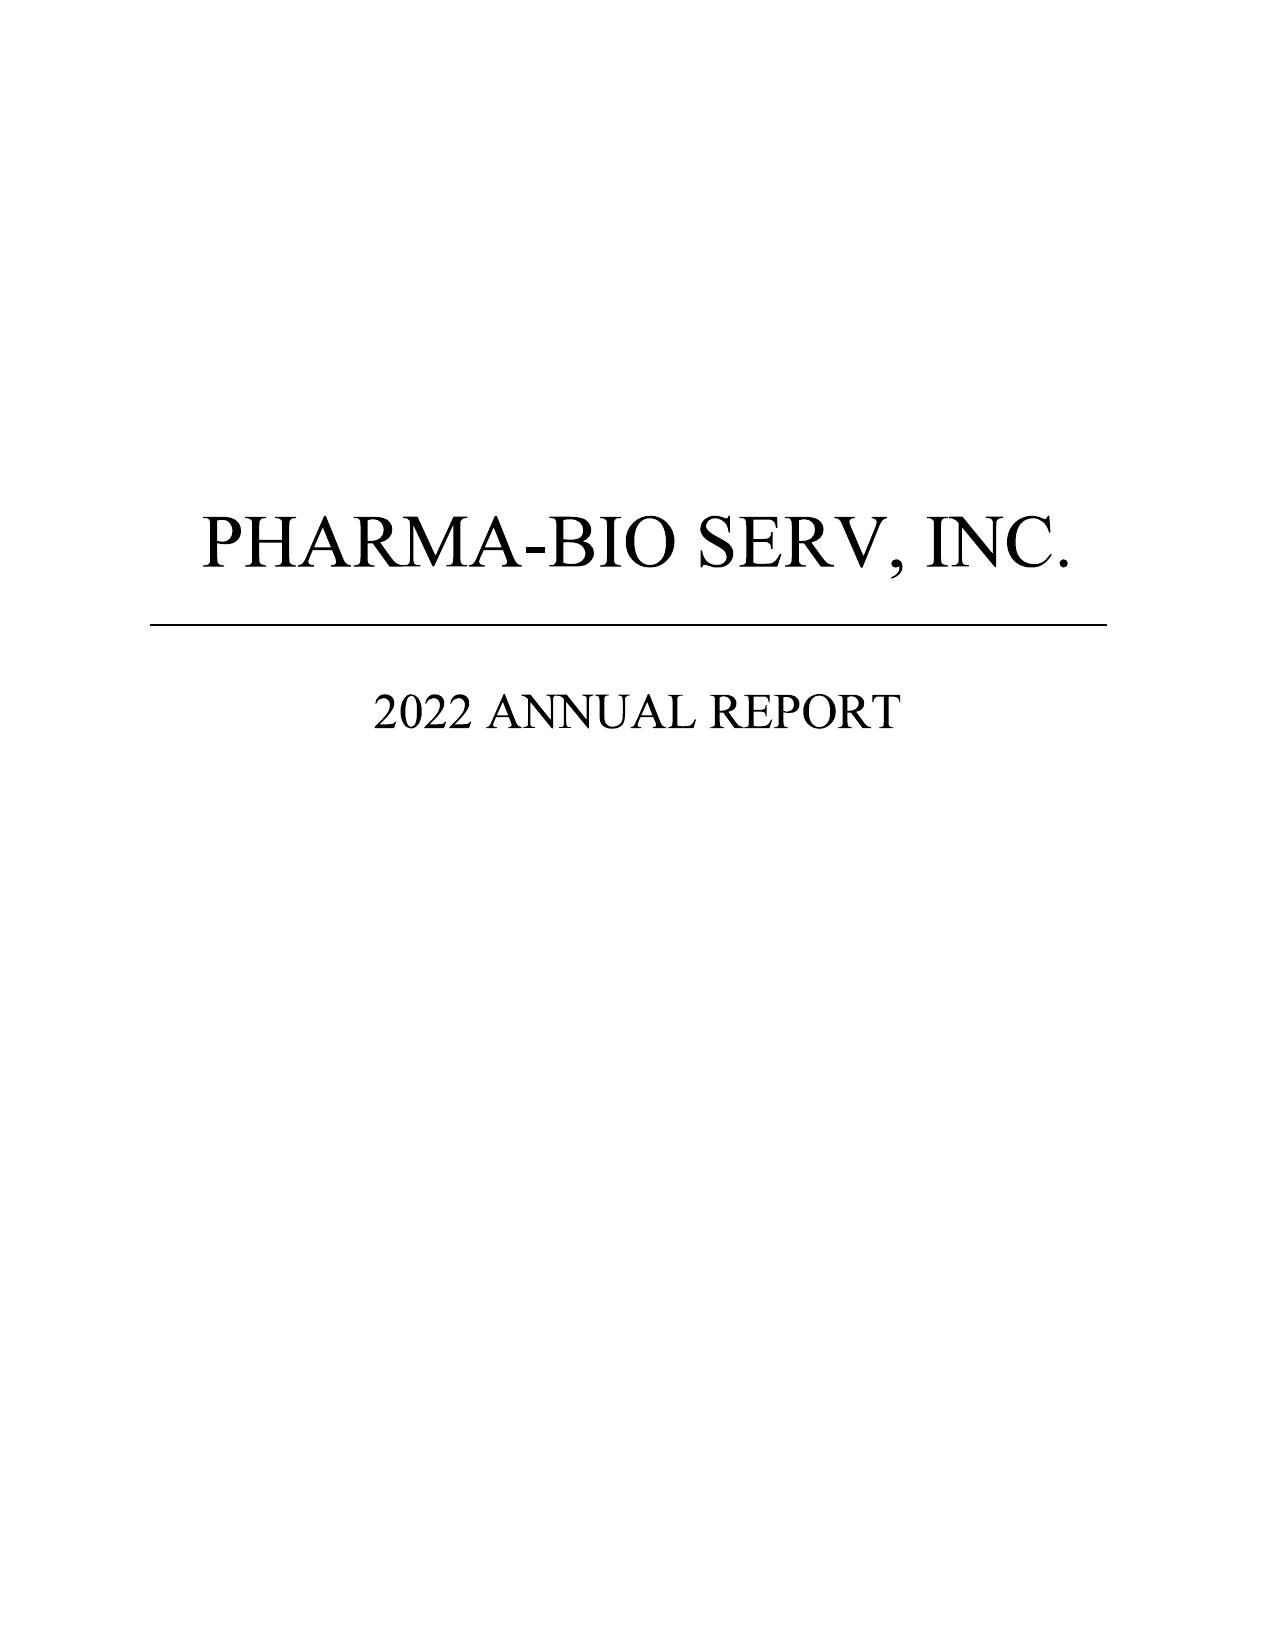 PHARMABIOSERV 2022 Annual Report